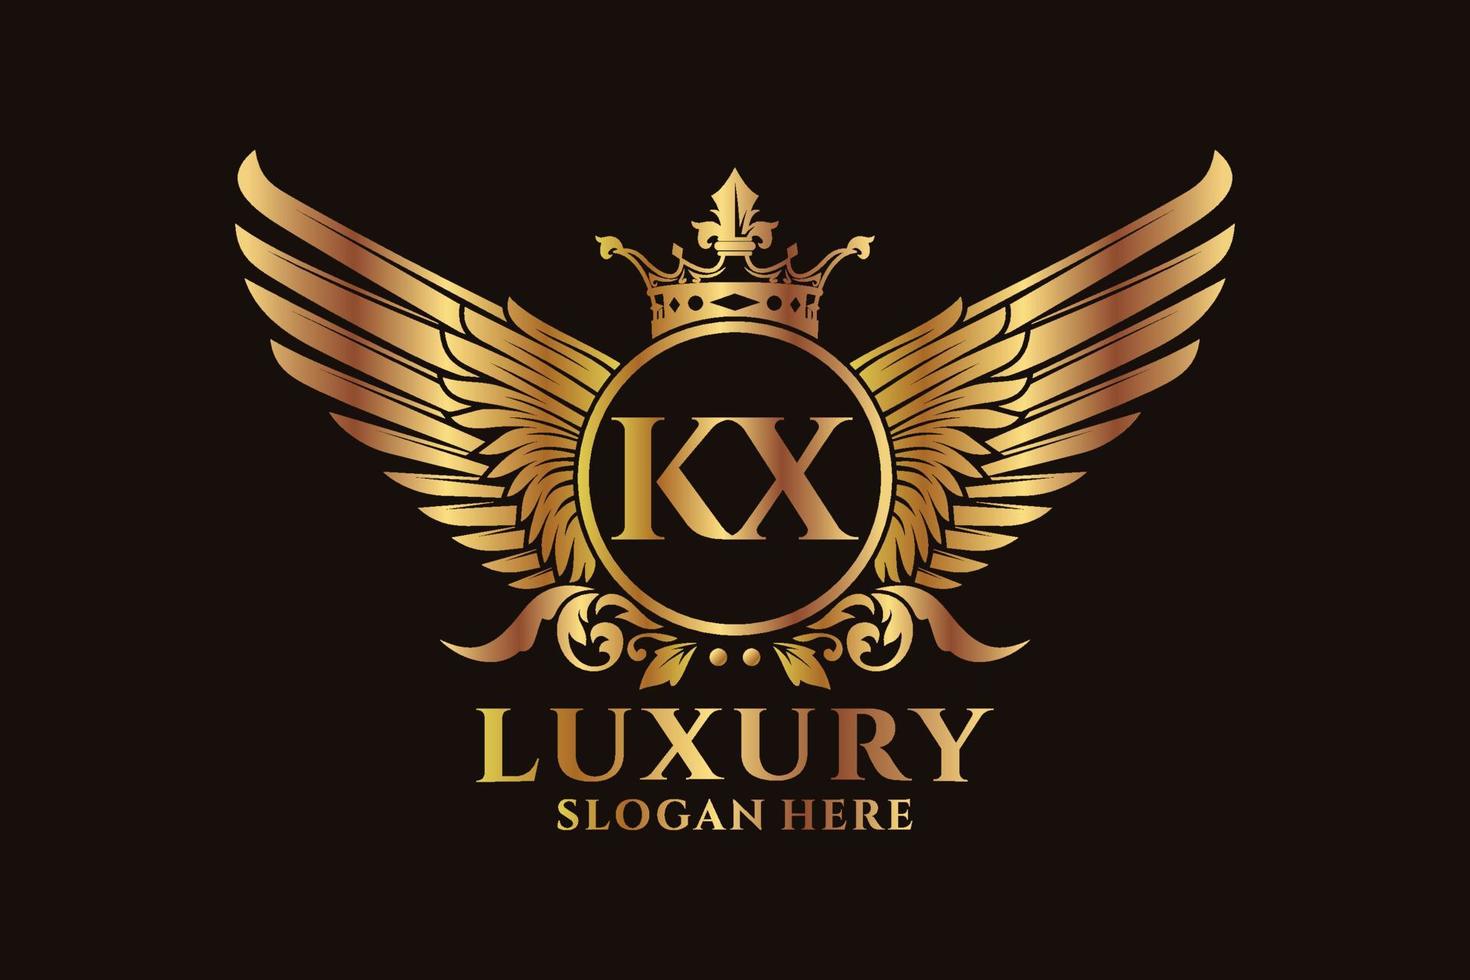 luxe Koninklijk vleugel brief kx kam goud kleur logo vector, zege logo, kam logo, vleugel logo, vector logo sjabloon.